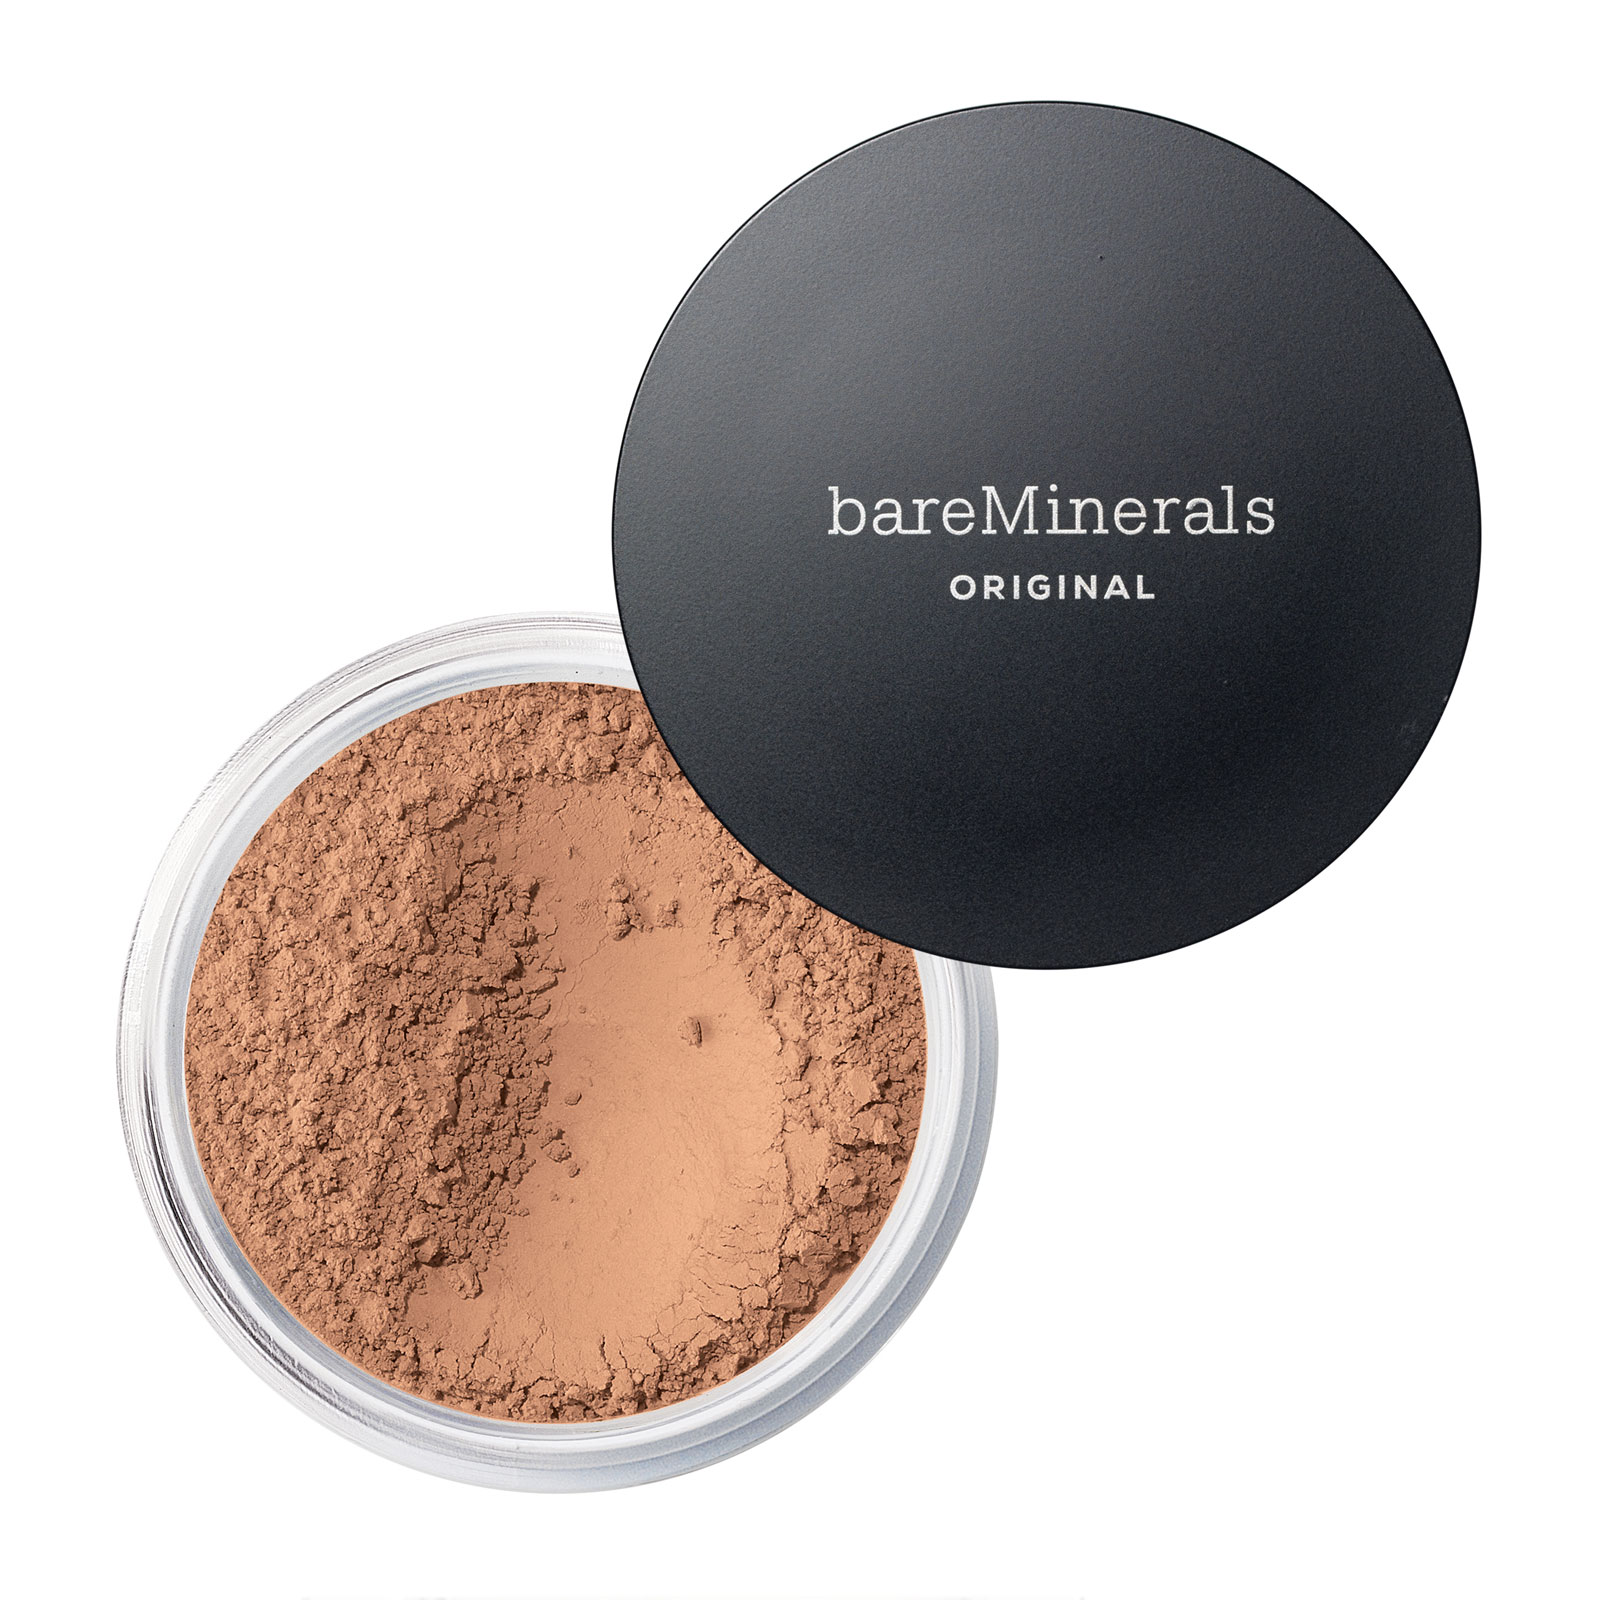 Bareminerals Original Loose Mineral Foundation Spf15 8G 18 Medium Tan (Medium/Tan, Cool)